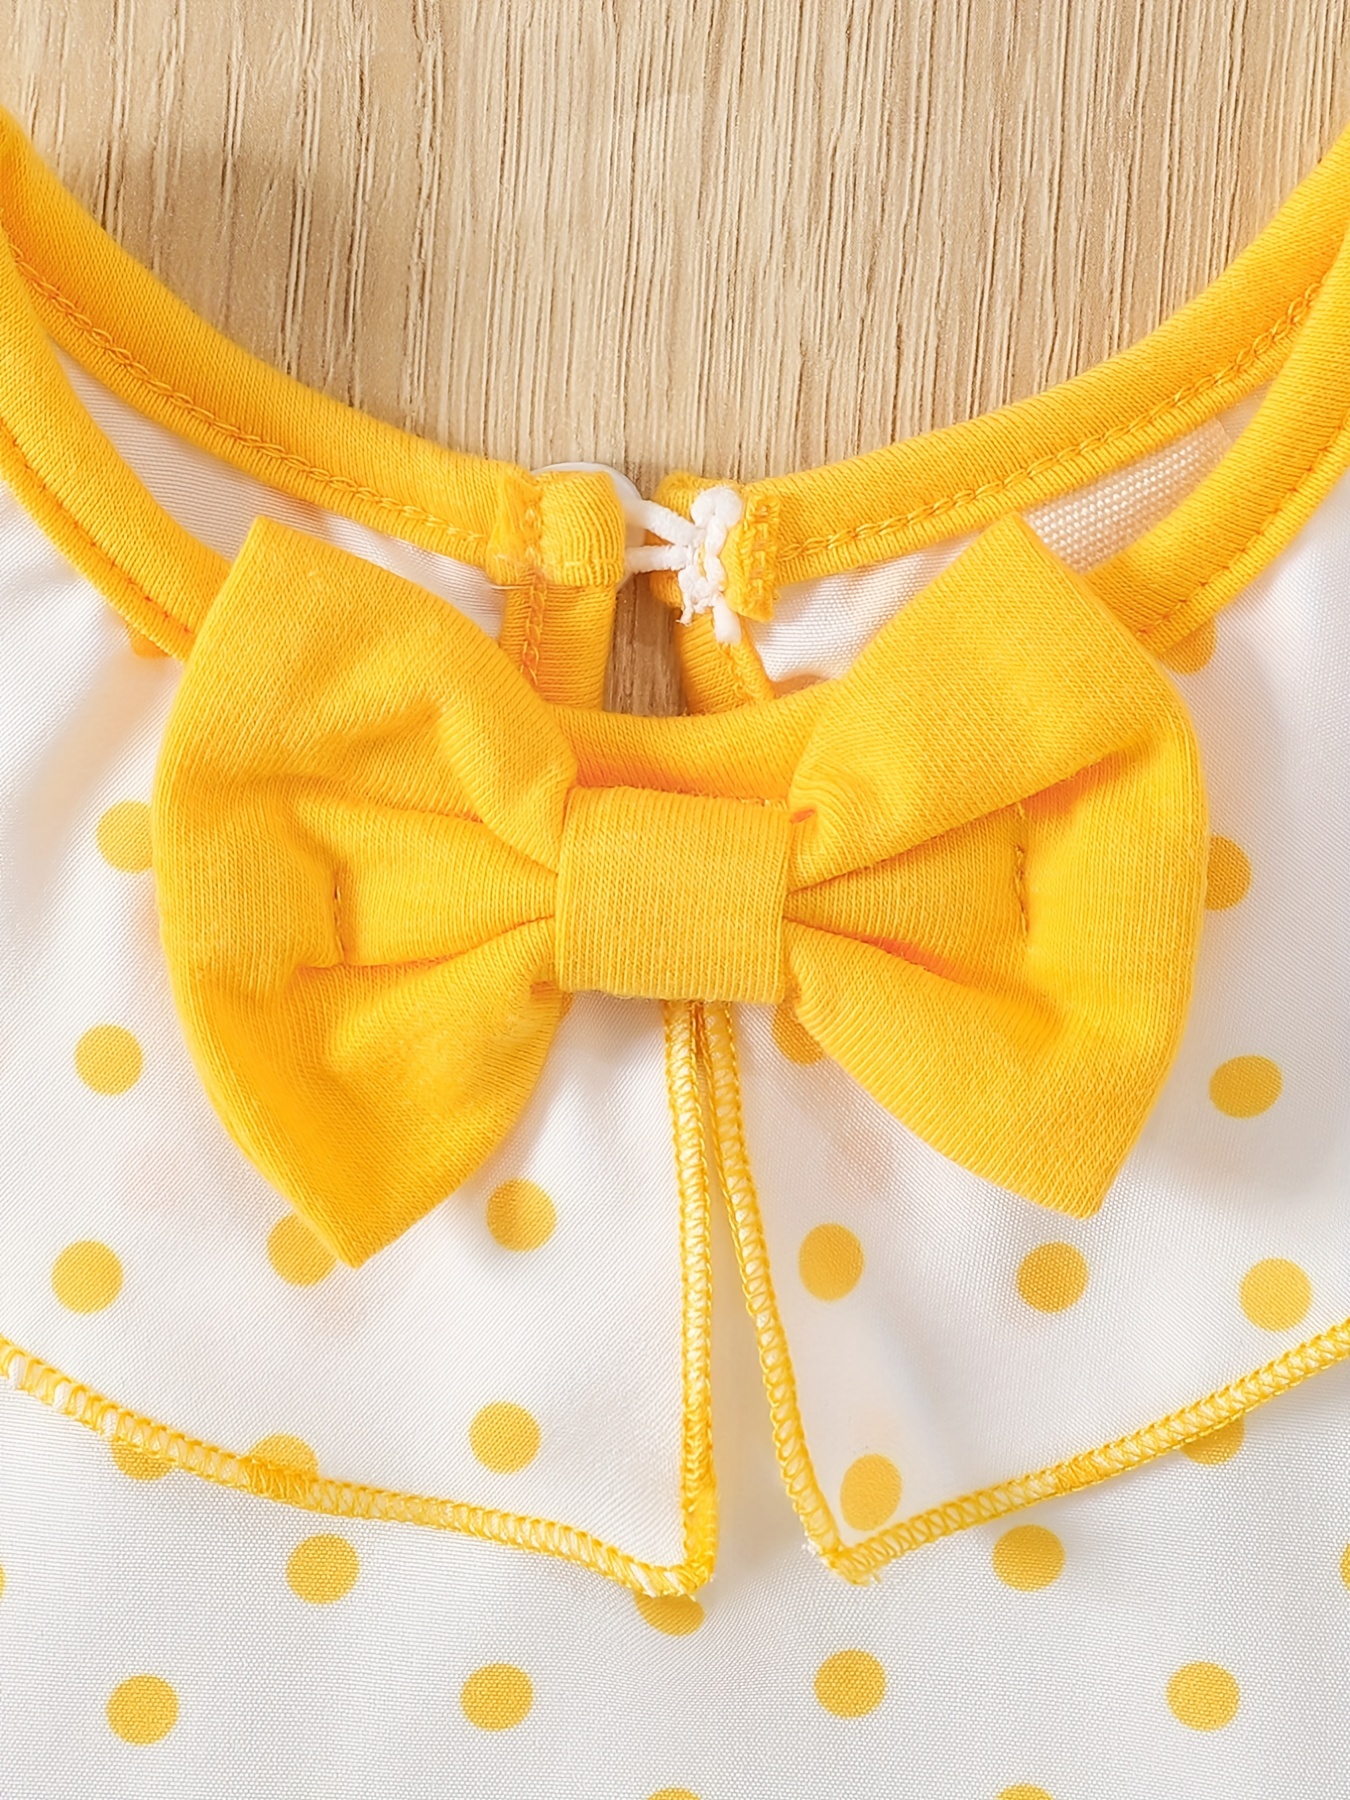 Baby Girl Josmangirls' Polka Dot Lace Collar & Bow Denim Set